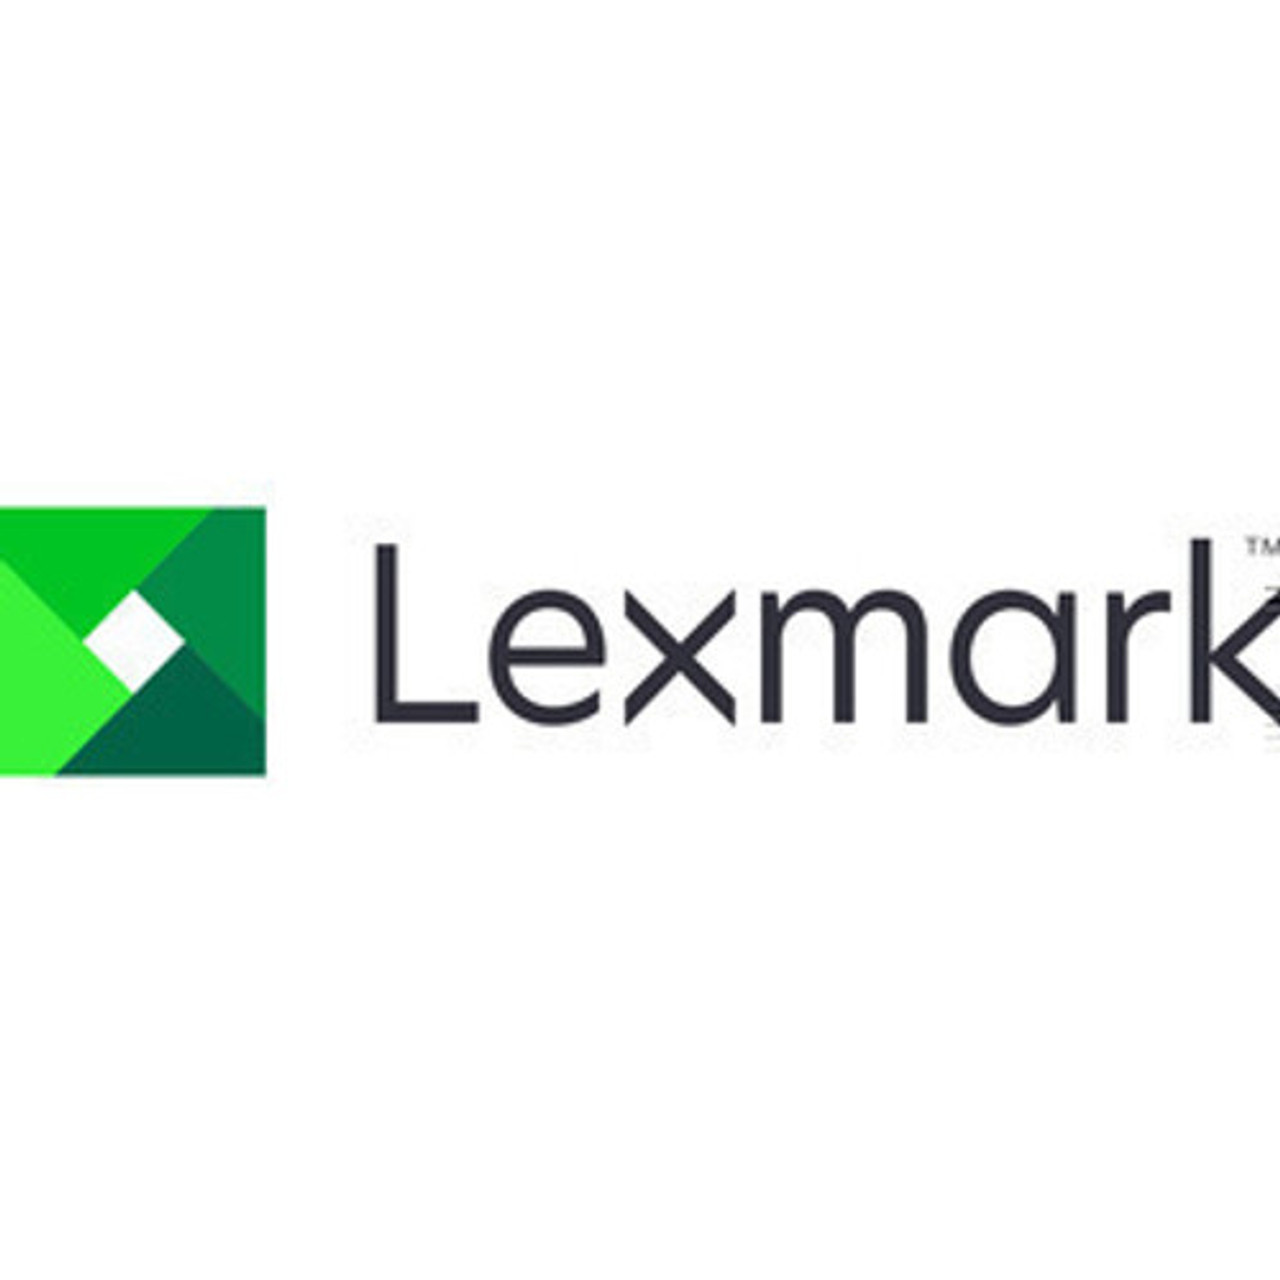 Lexmark CX522 2 YR Onsite Repair Next Business Day - 2364191